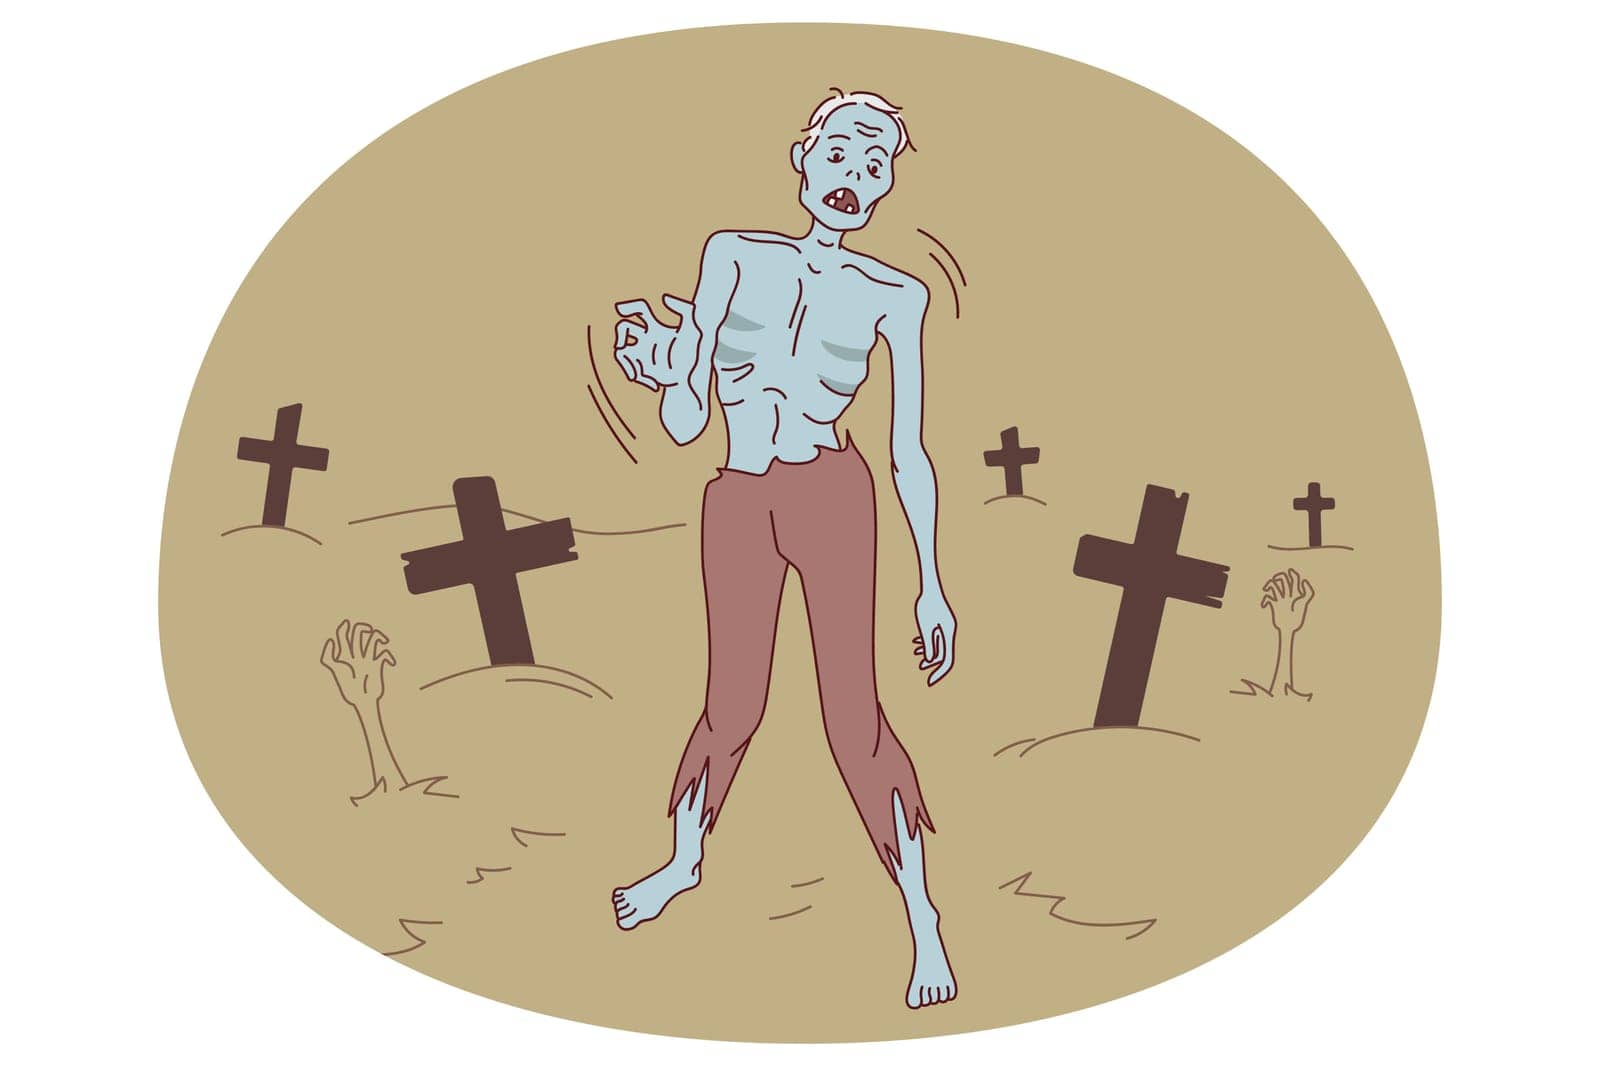 Zombie walking on cemetery at night. Creepy monster on Halloween outside. Walking dead. Vector illustration.